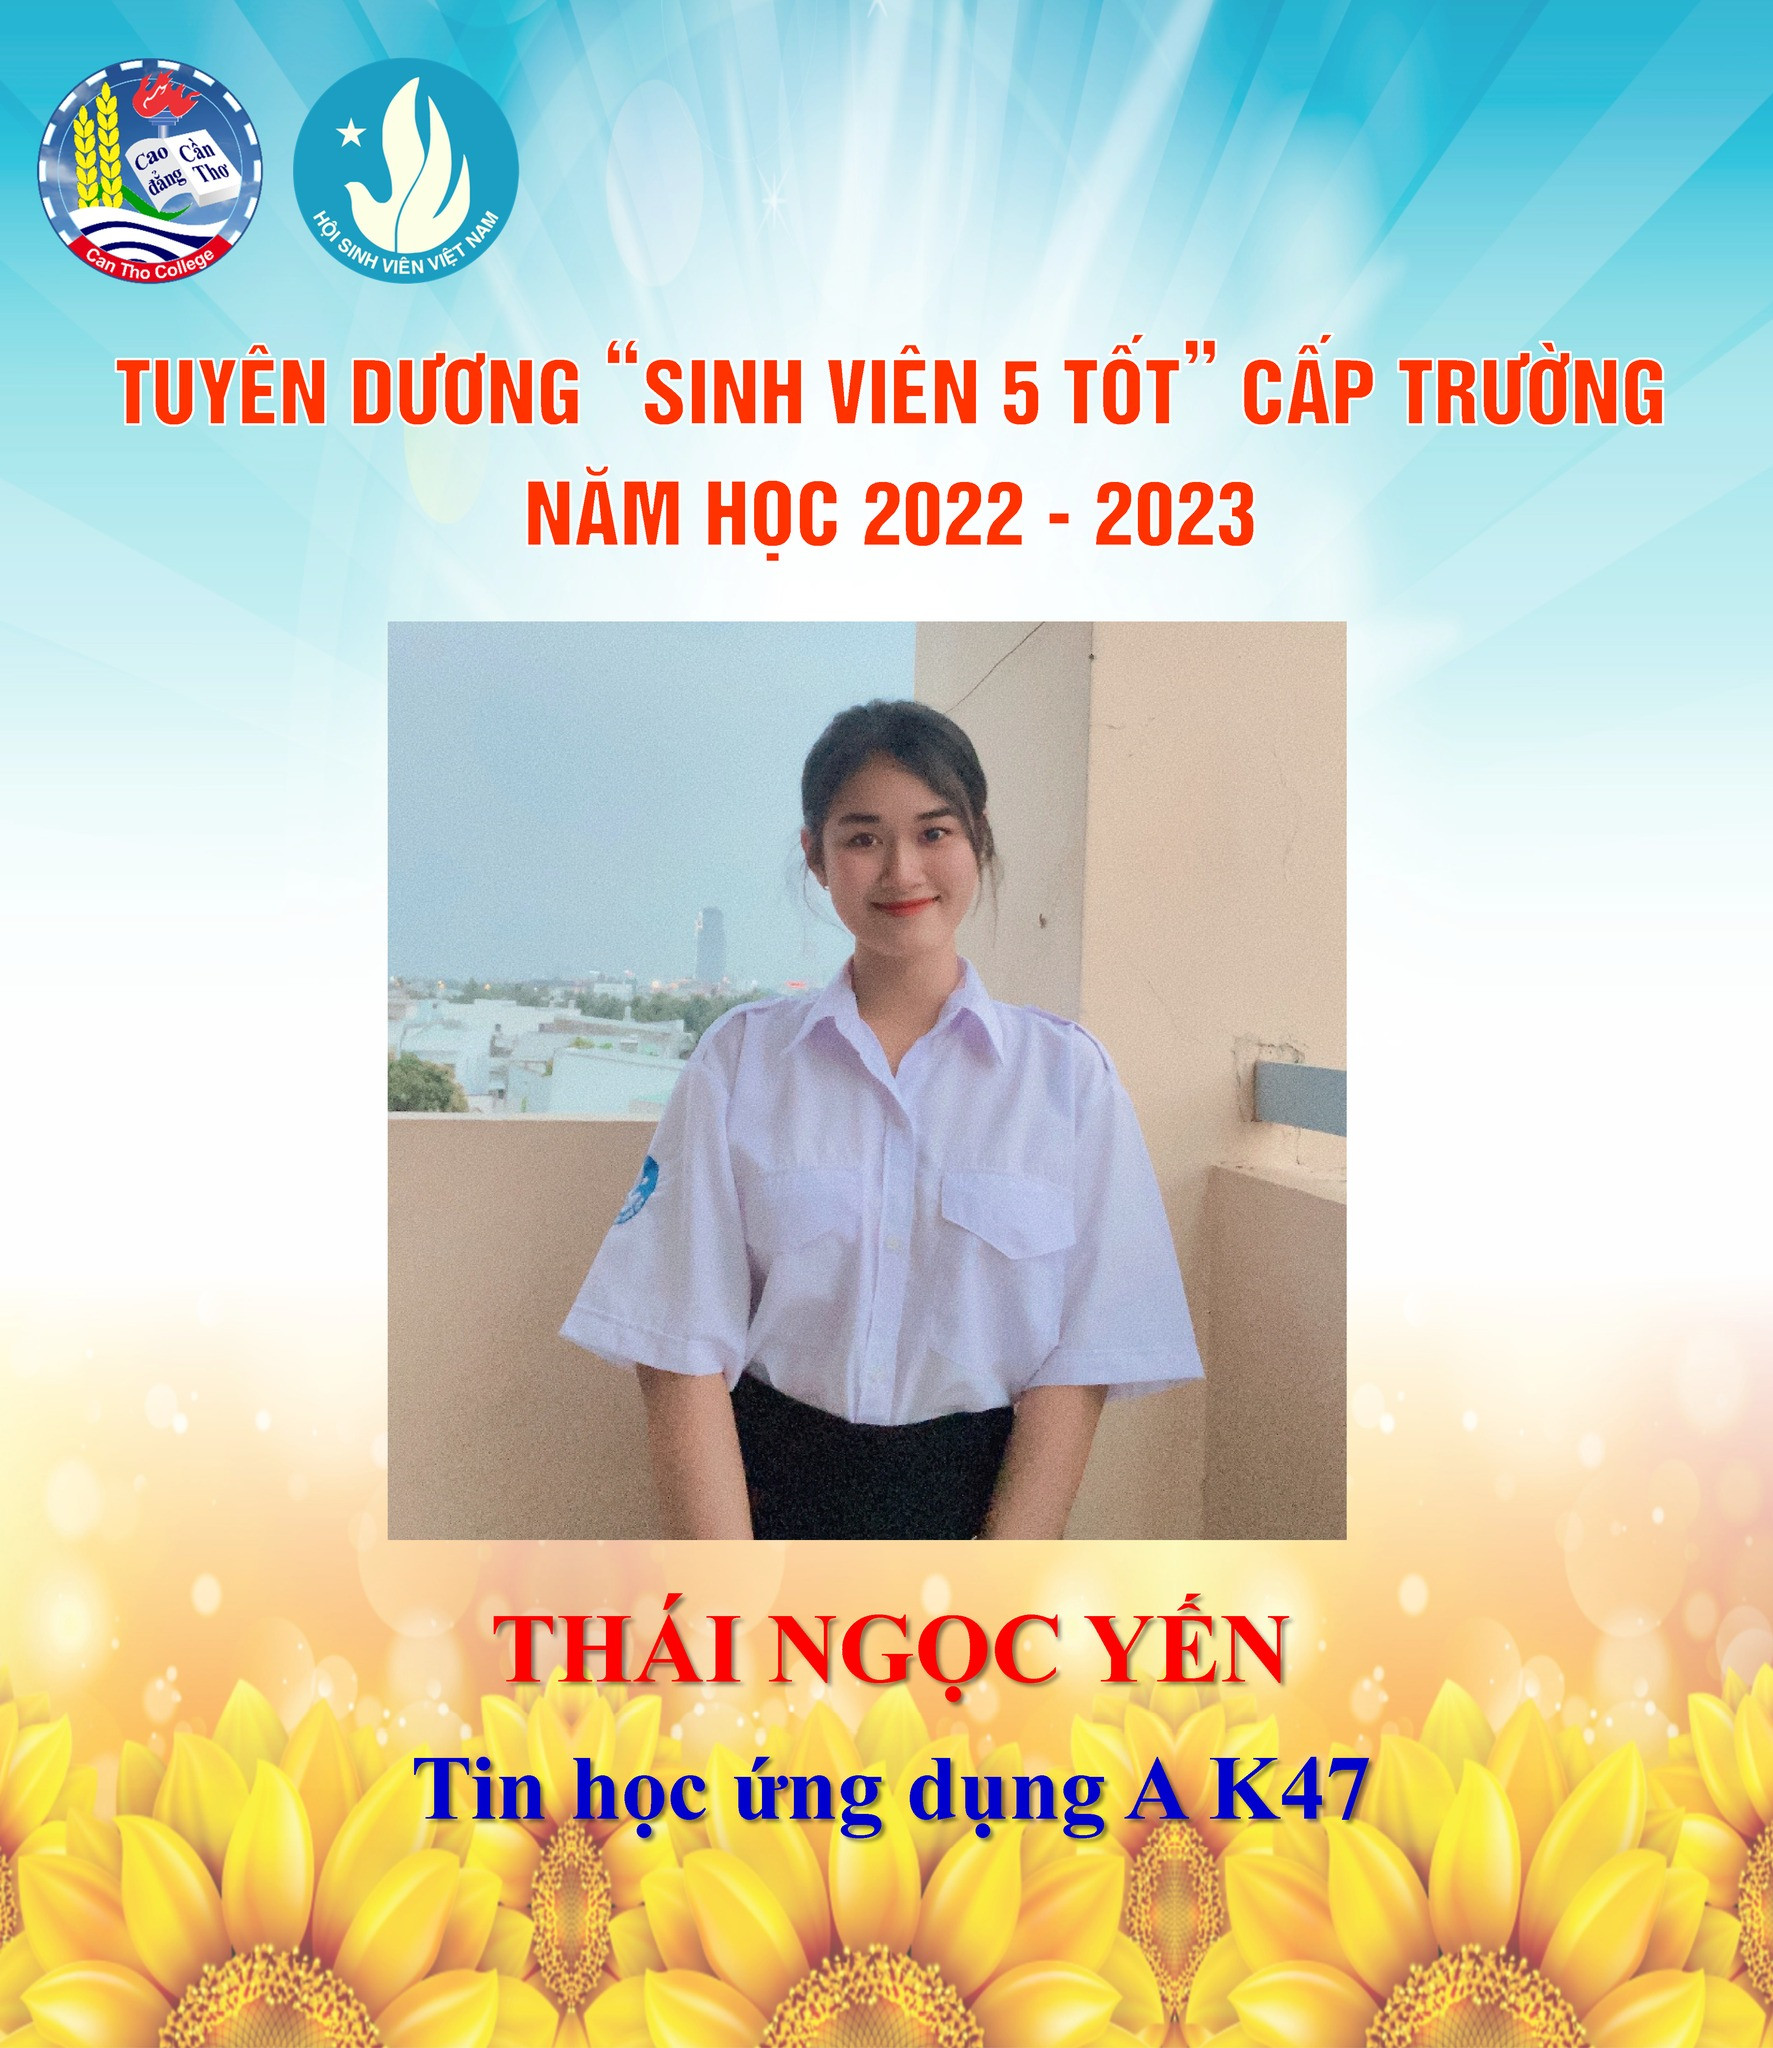 THAI NGOC YEN